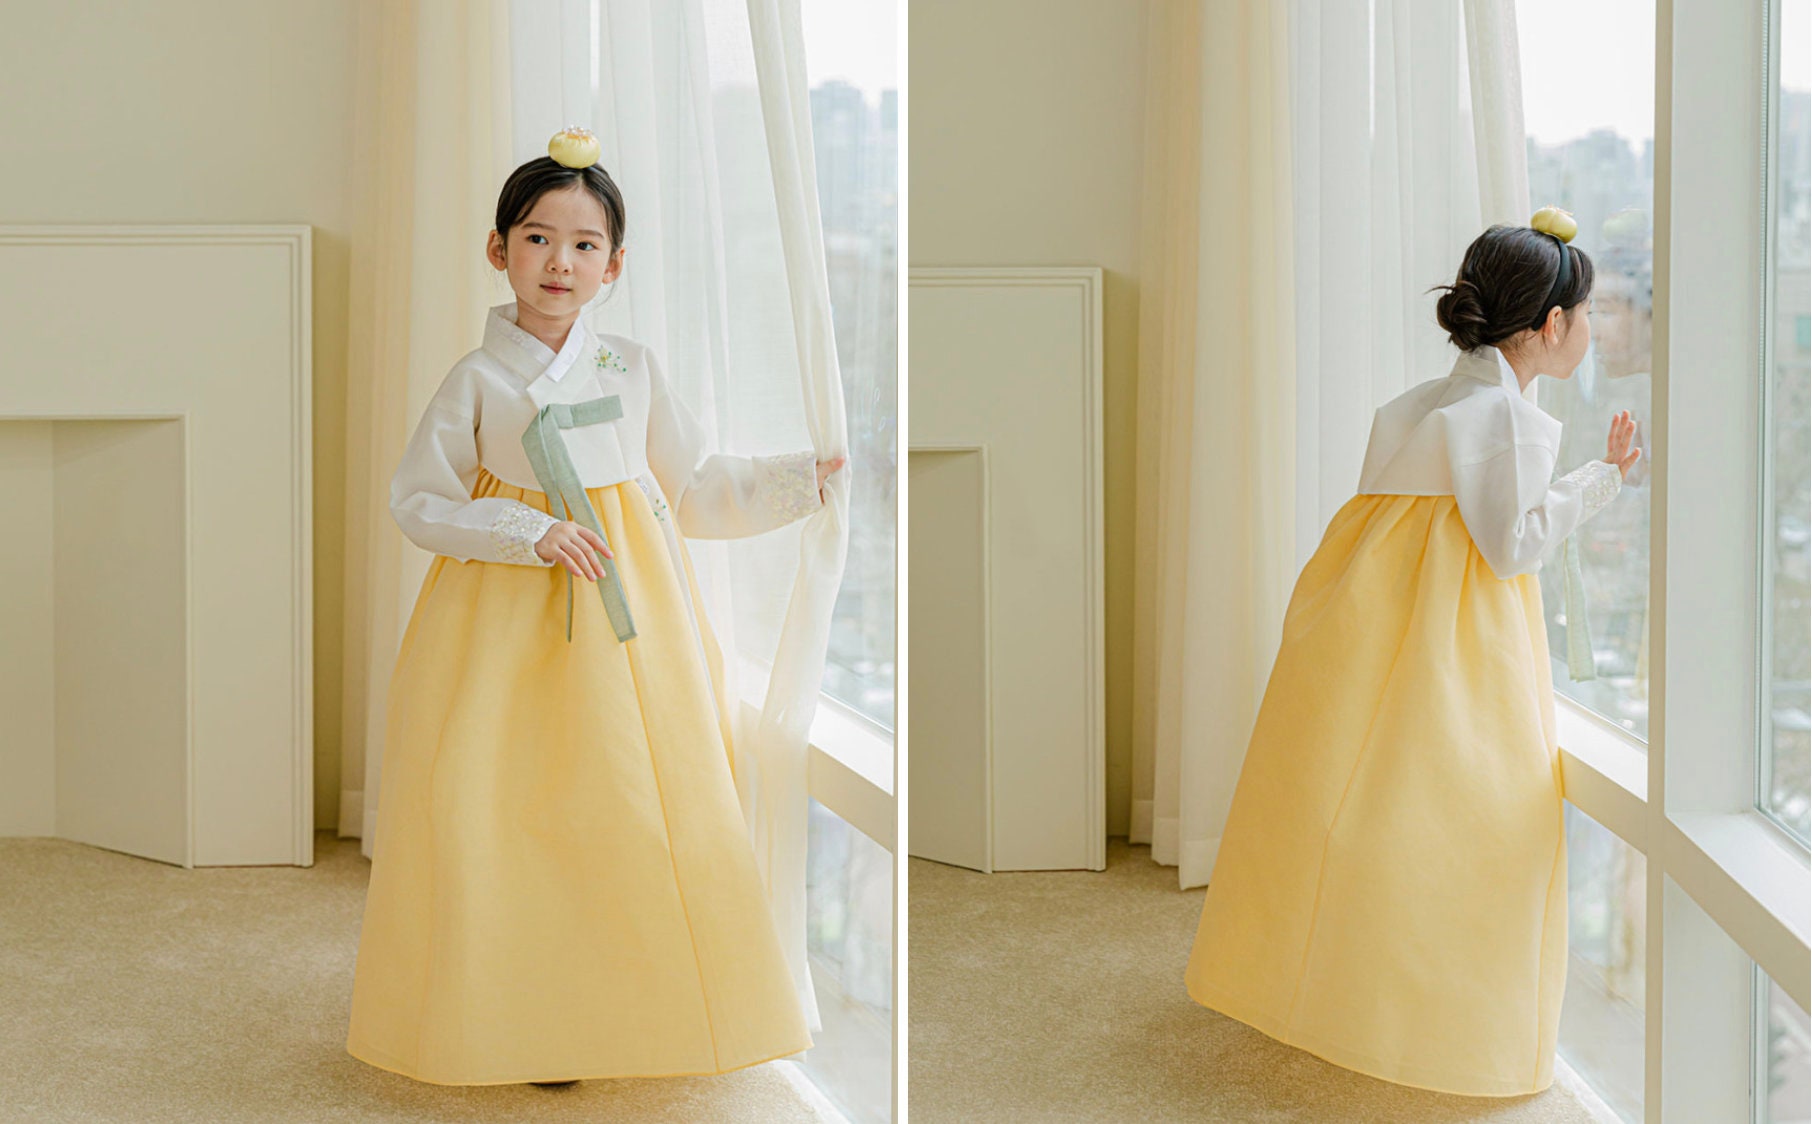 100days~10years old Dol Hanbok Set Baby Girl Habok Floral Yellow Girl HANBOK Korean 1ST Birthday Party